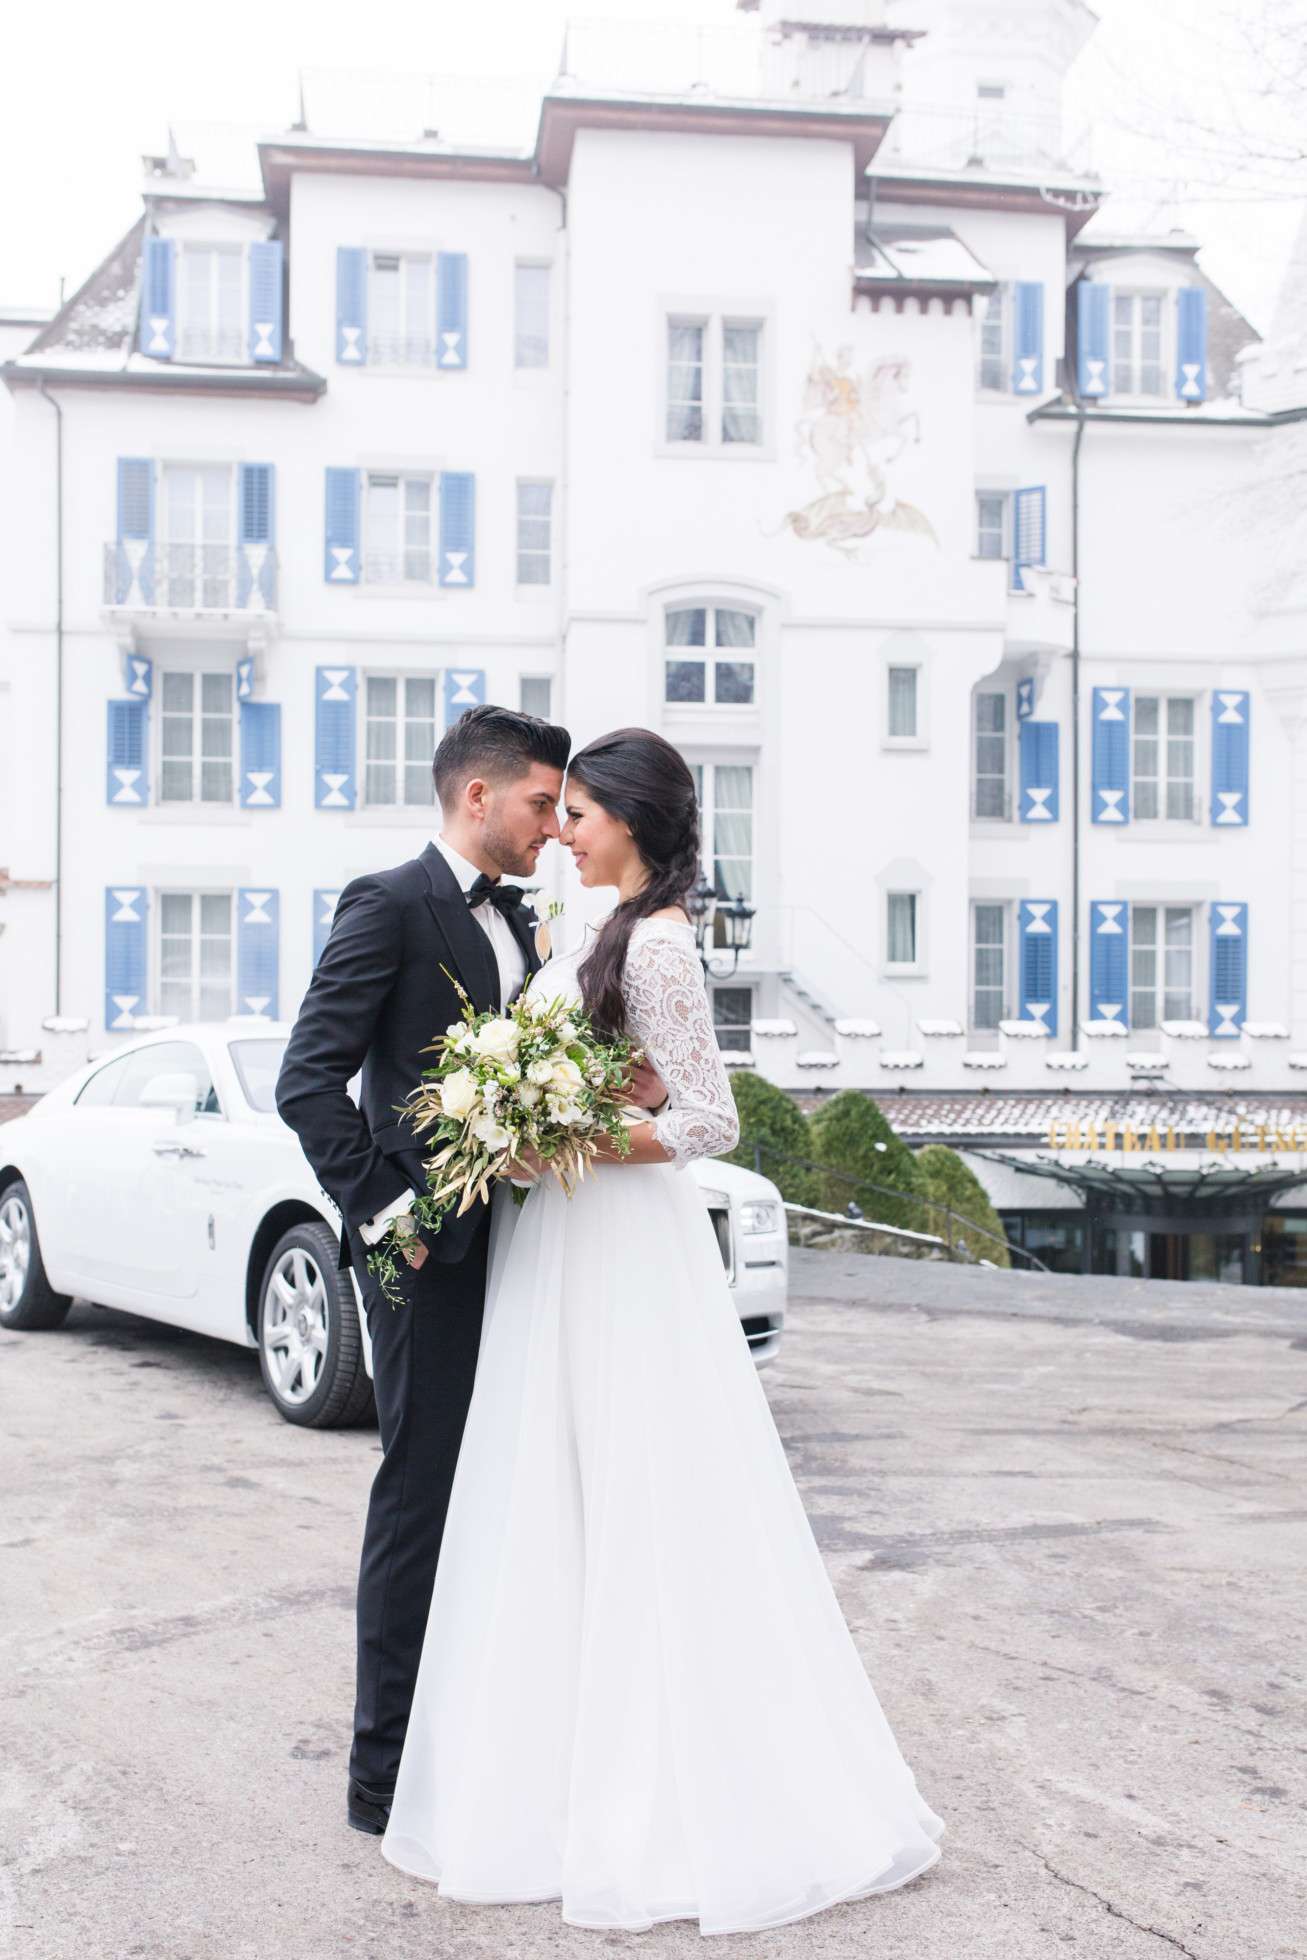 Swiss wedding planner